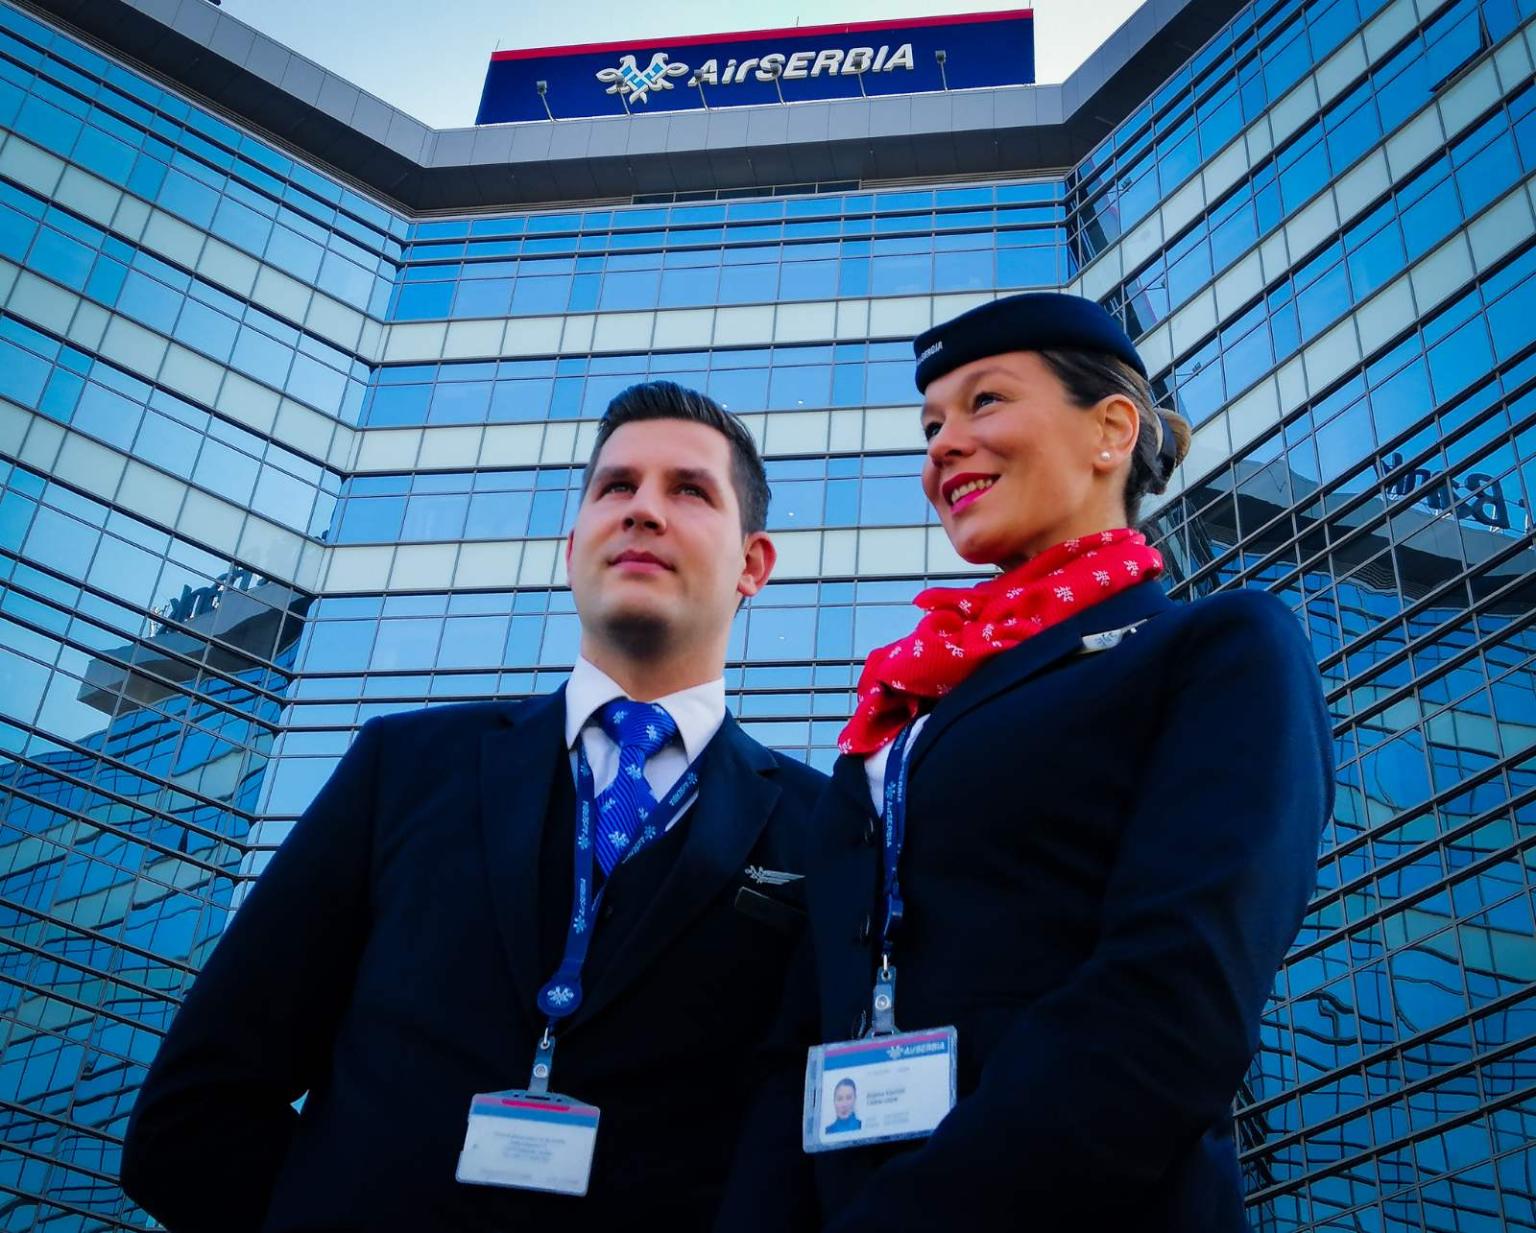 air serbia travel agents